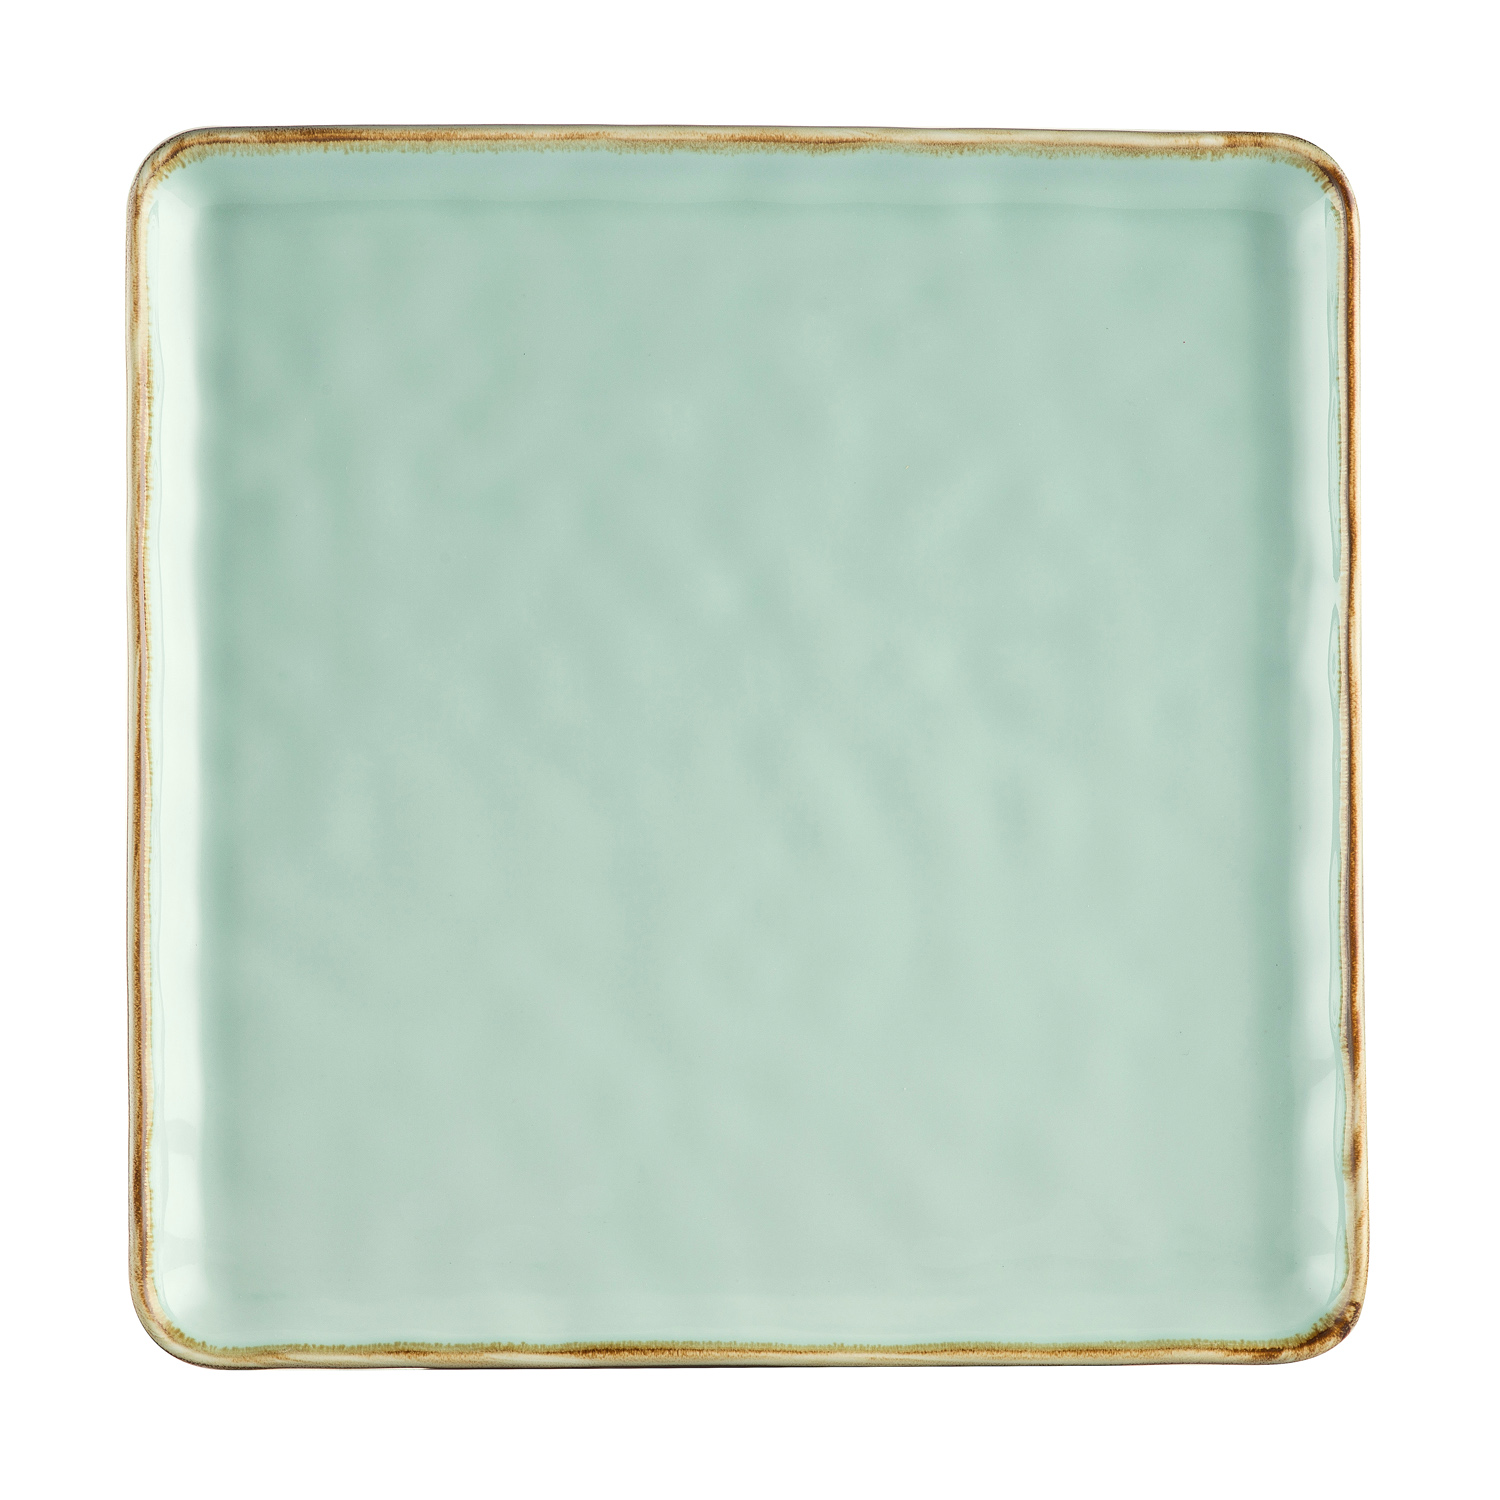 CAC China PMS-SQ21-G Palm Springs Light Green Porcelain Square Plate 12"  - 1 dozen